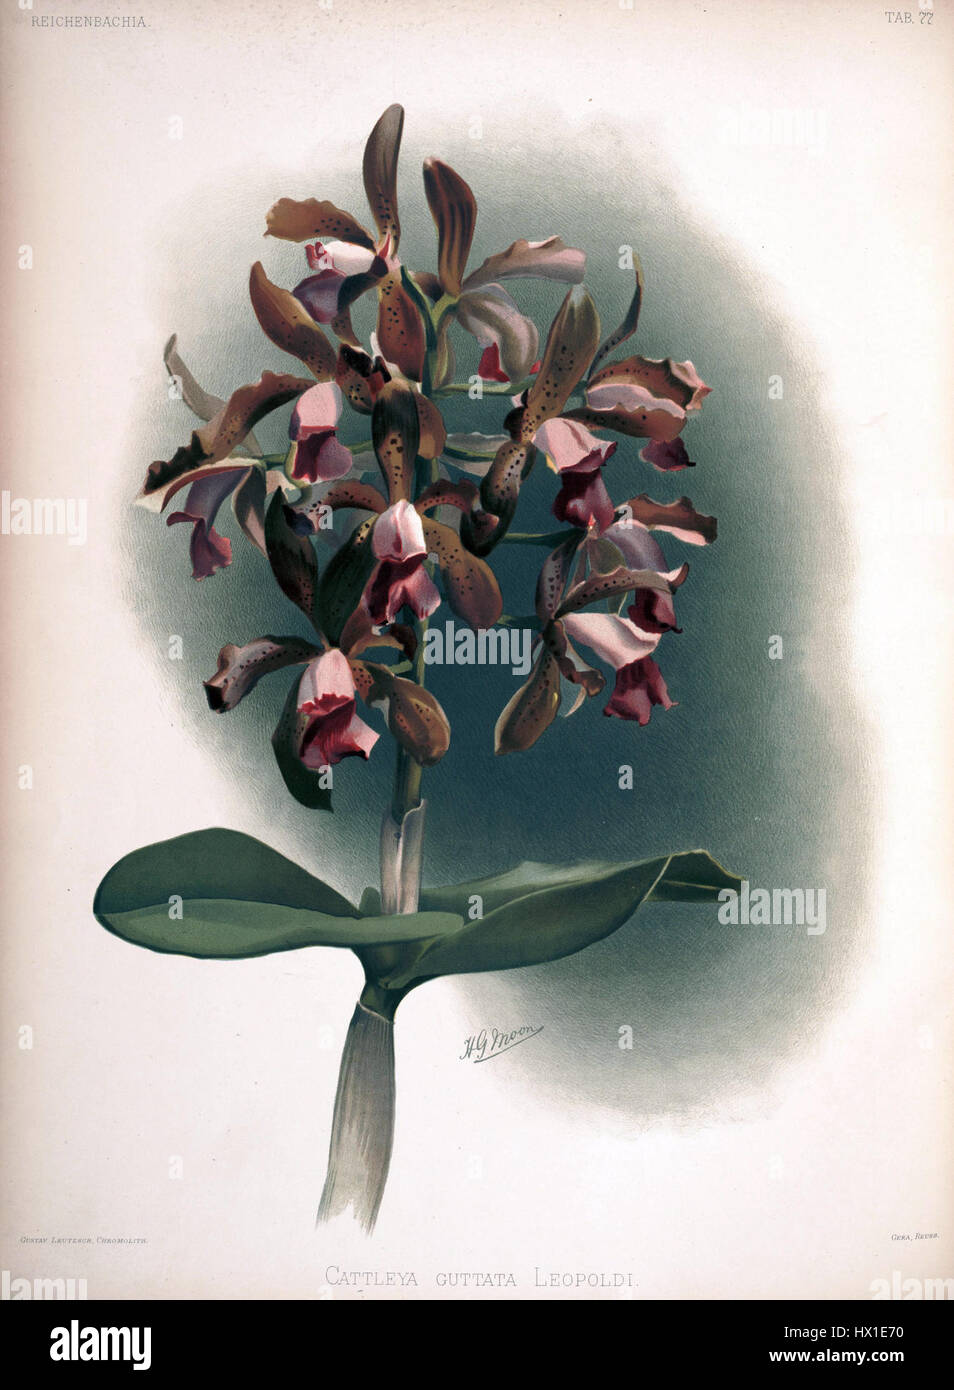 Frederick Sander   Reichenbachia II plate 77 (1890)   Cattleya guttata leopoldi Stock Photo